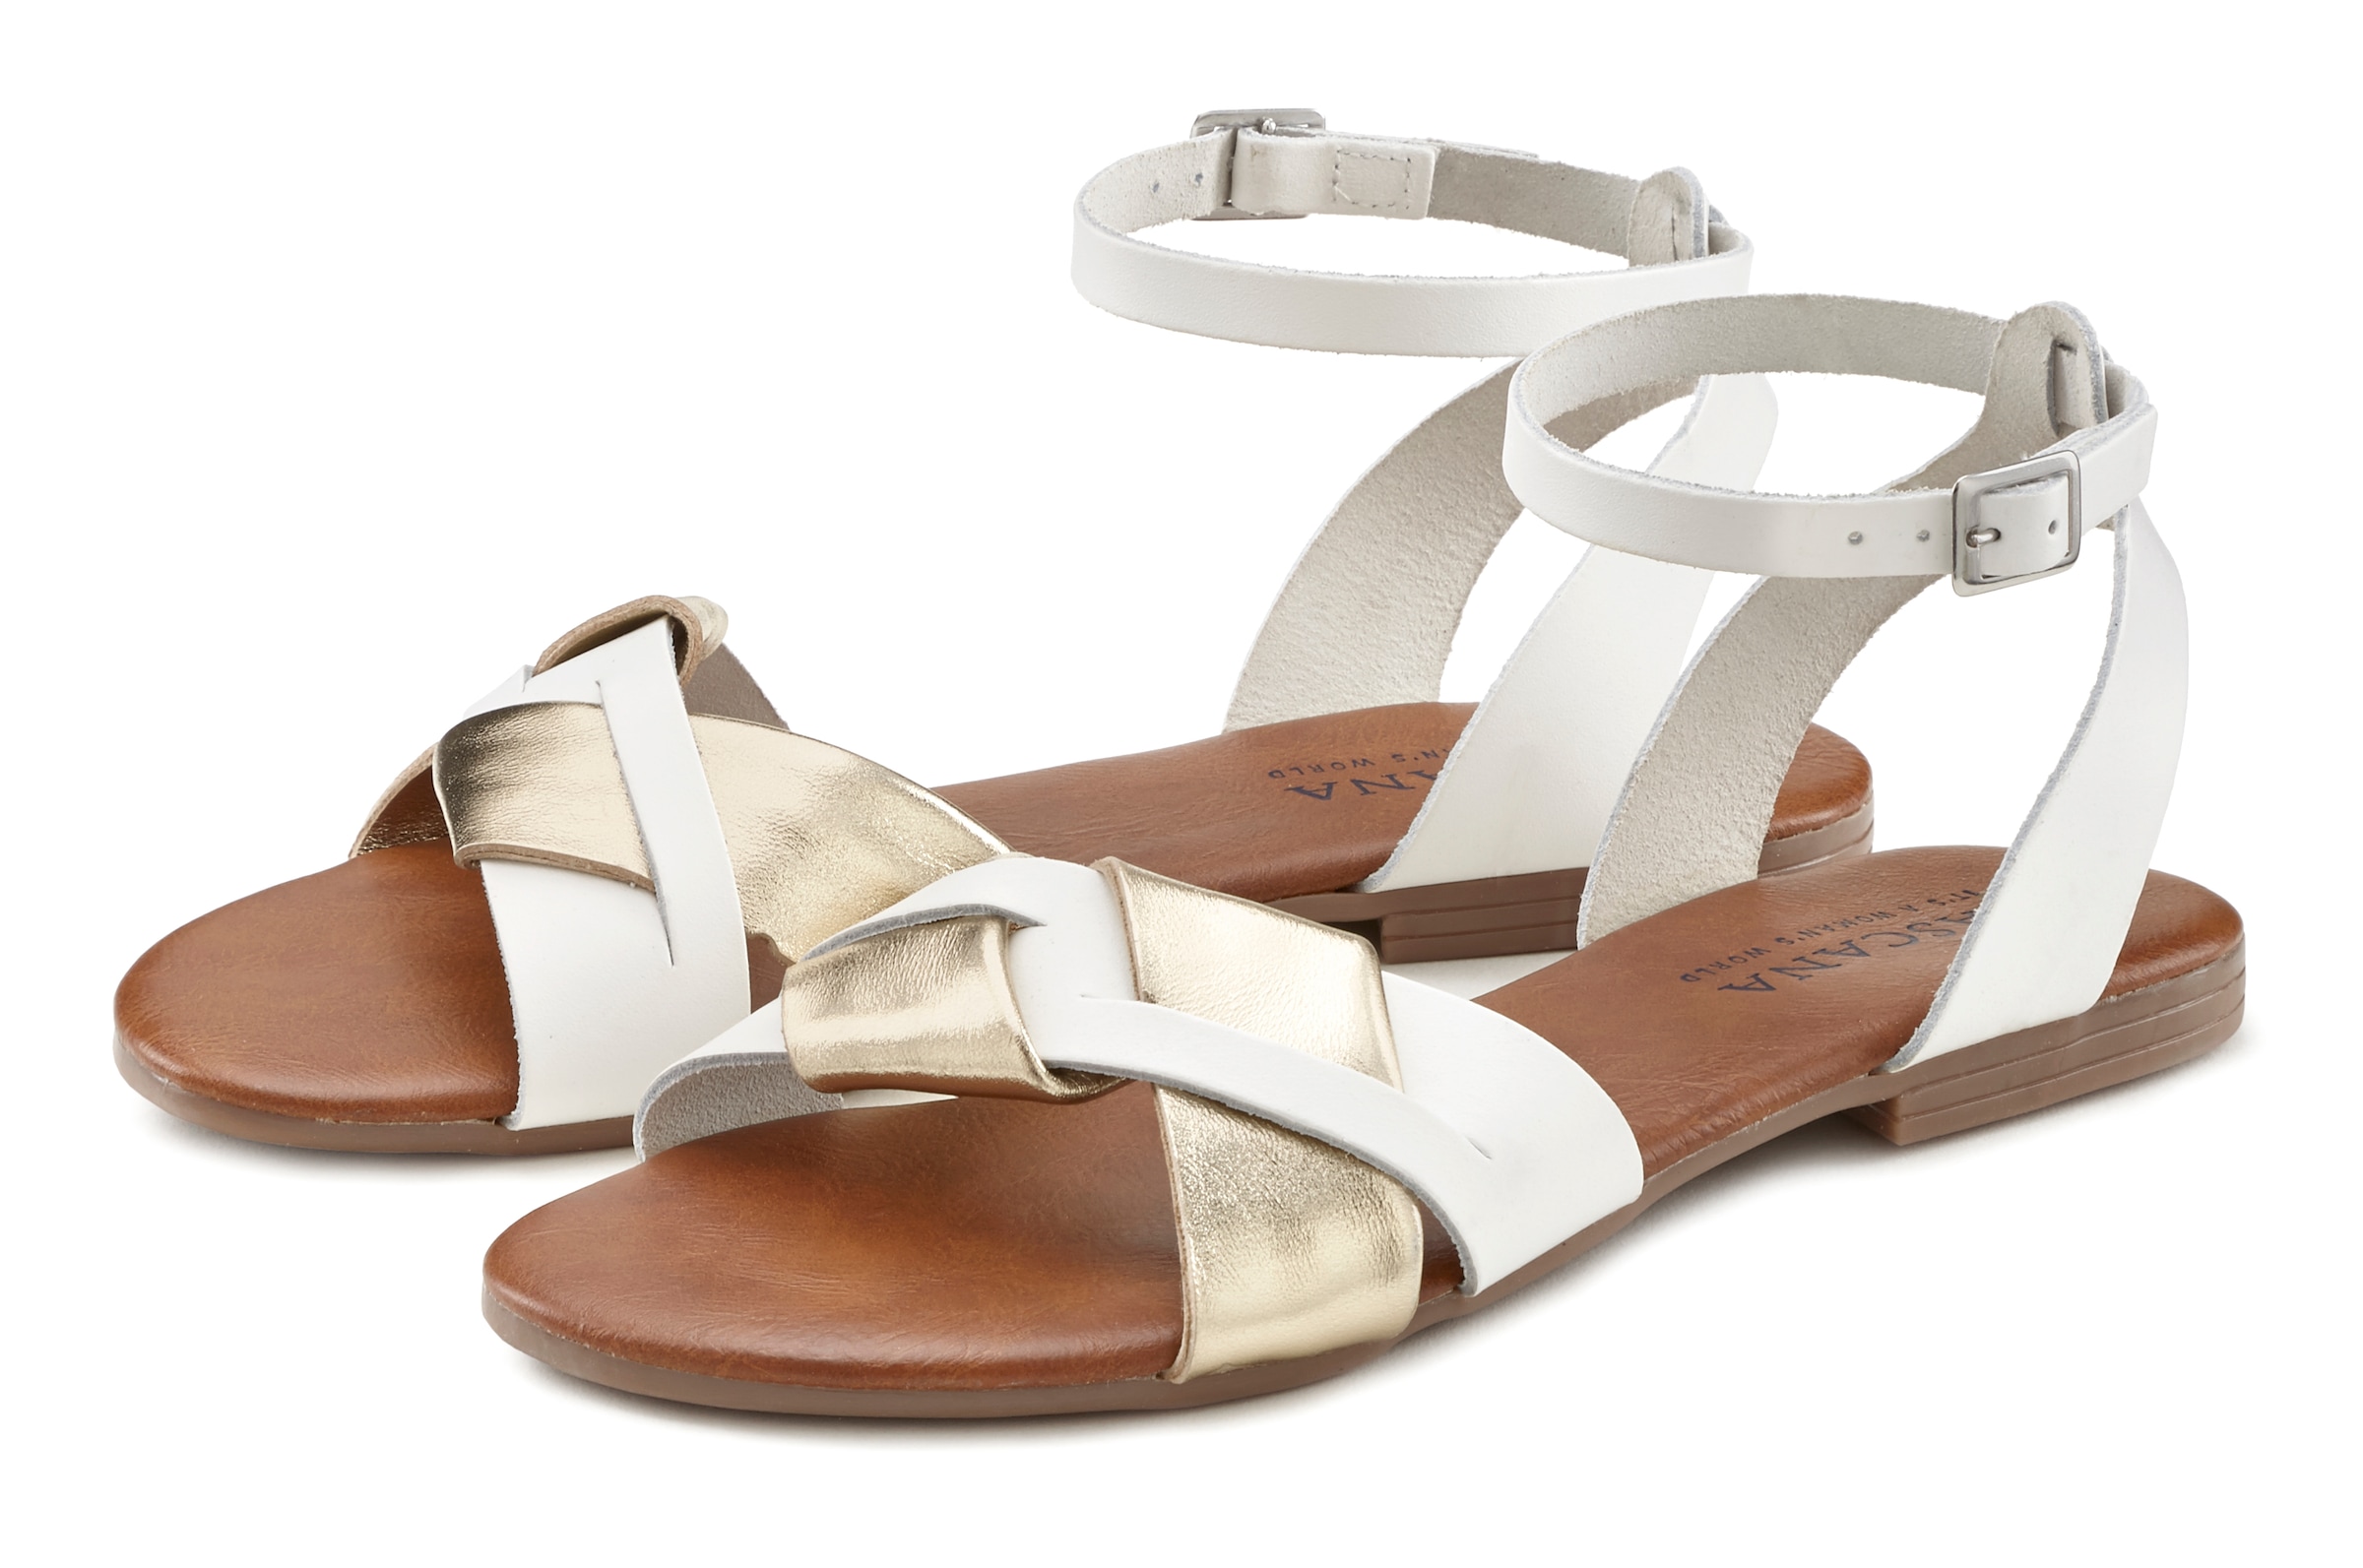 Sandale, Sandalette, Sommerschuh aus hochwertigem Leder mit Metallic Optik